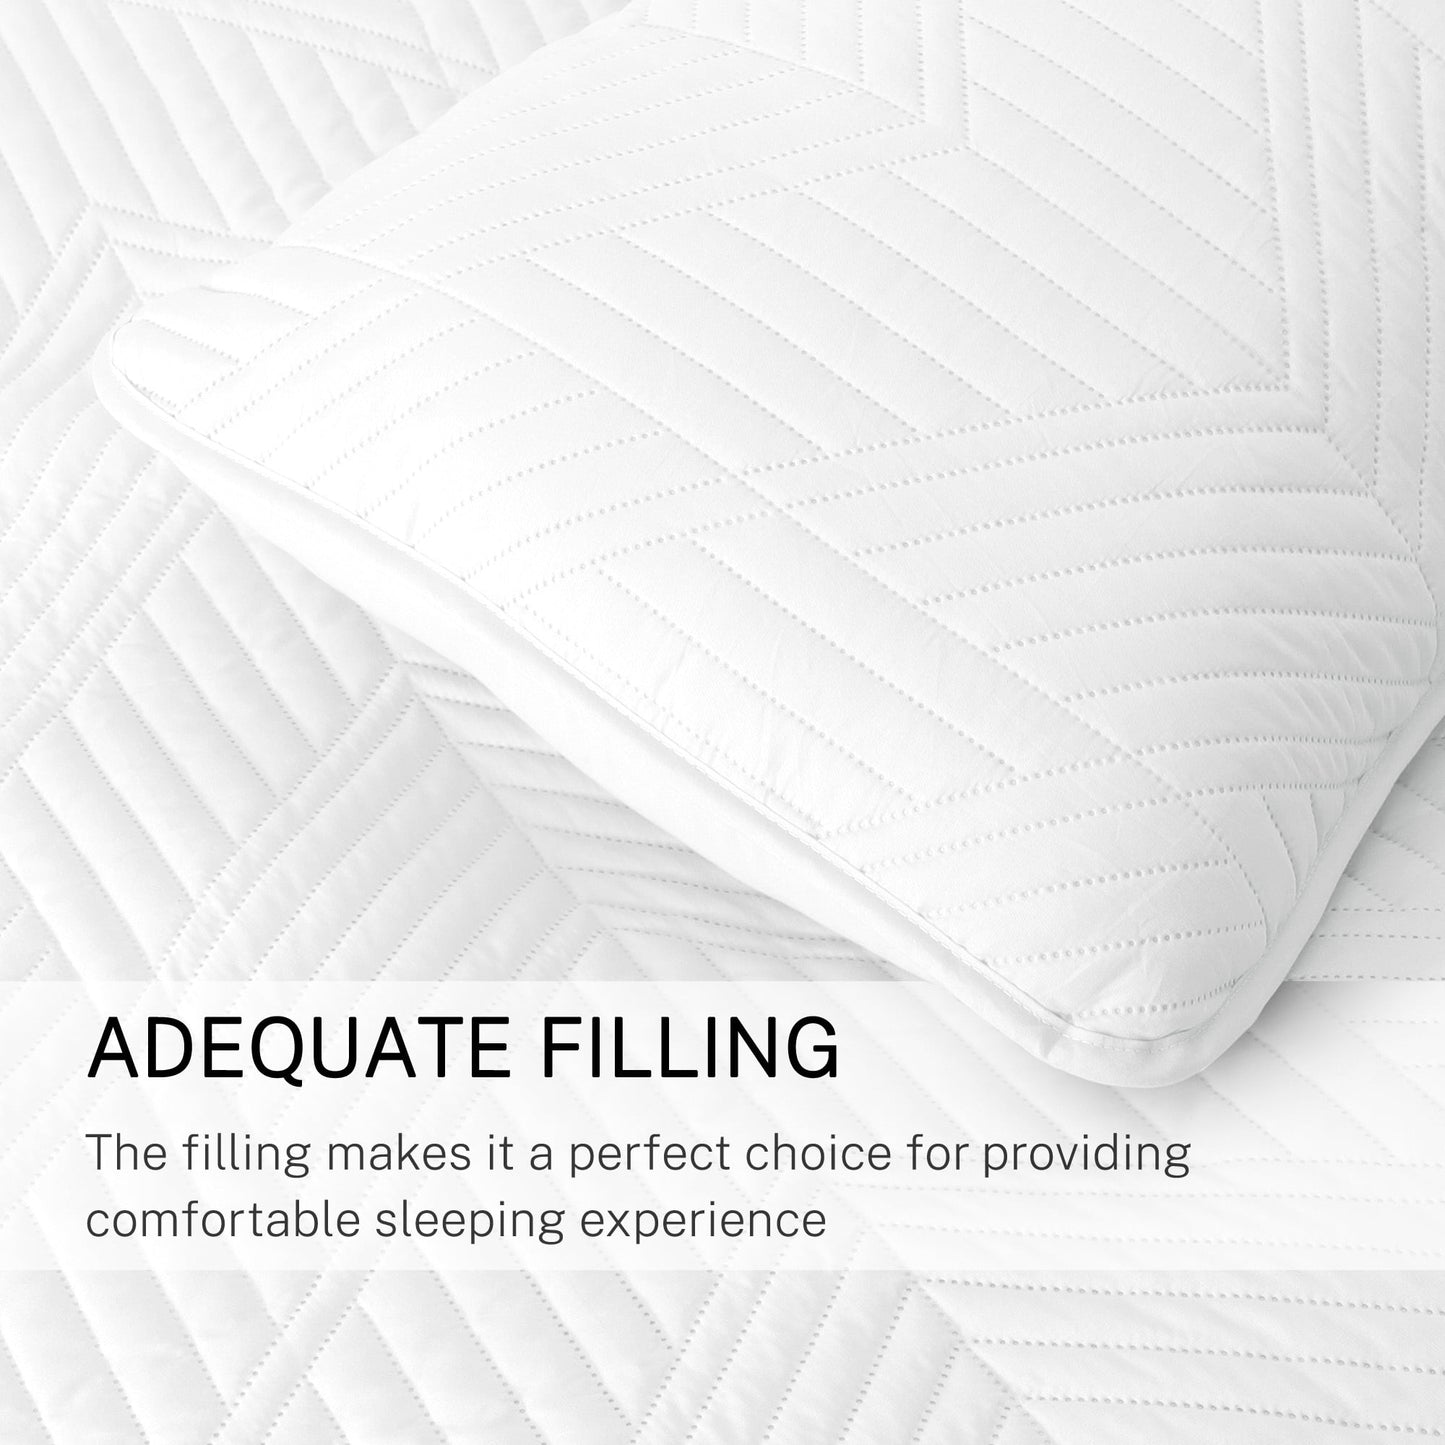 Exclusivo Mezcla Ultrasonic Twin Quilt Bedding Set, Lightweight White Bedspreads Soft Modern Geometric Coverlet Set for All Seasons (1 Quilt and 1 Pillow Sham)